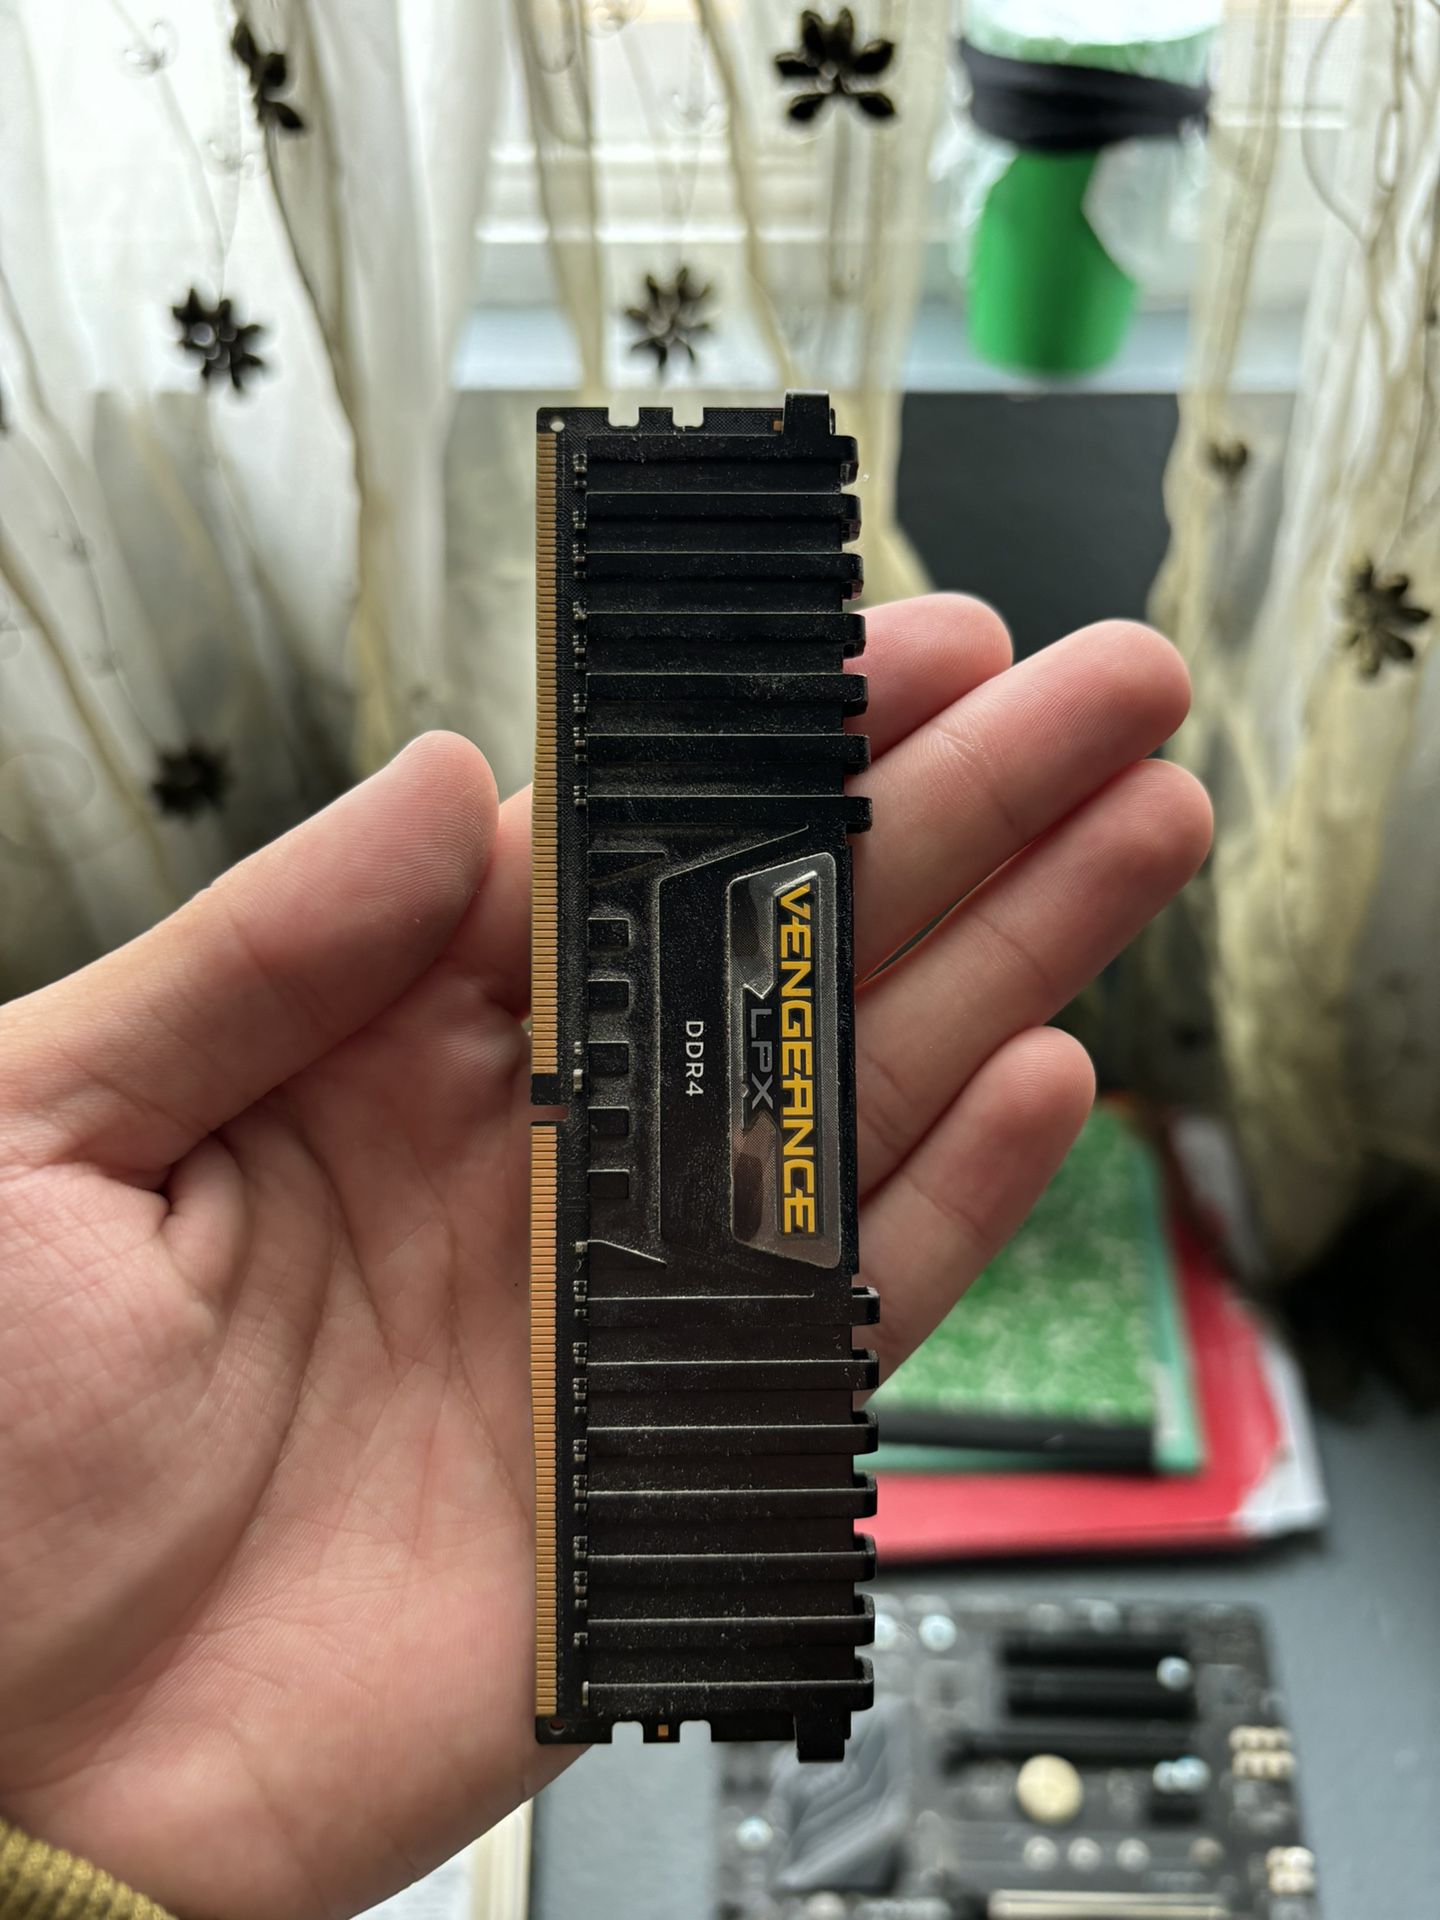 Corsair Vengeance LPX 16GB (2x8GB) DDR4 DRAM 3200MHz C16 Desktop Memory Kit - Black